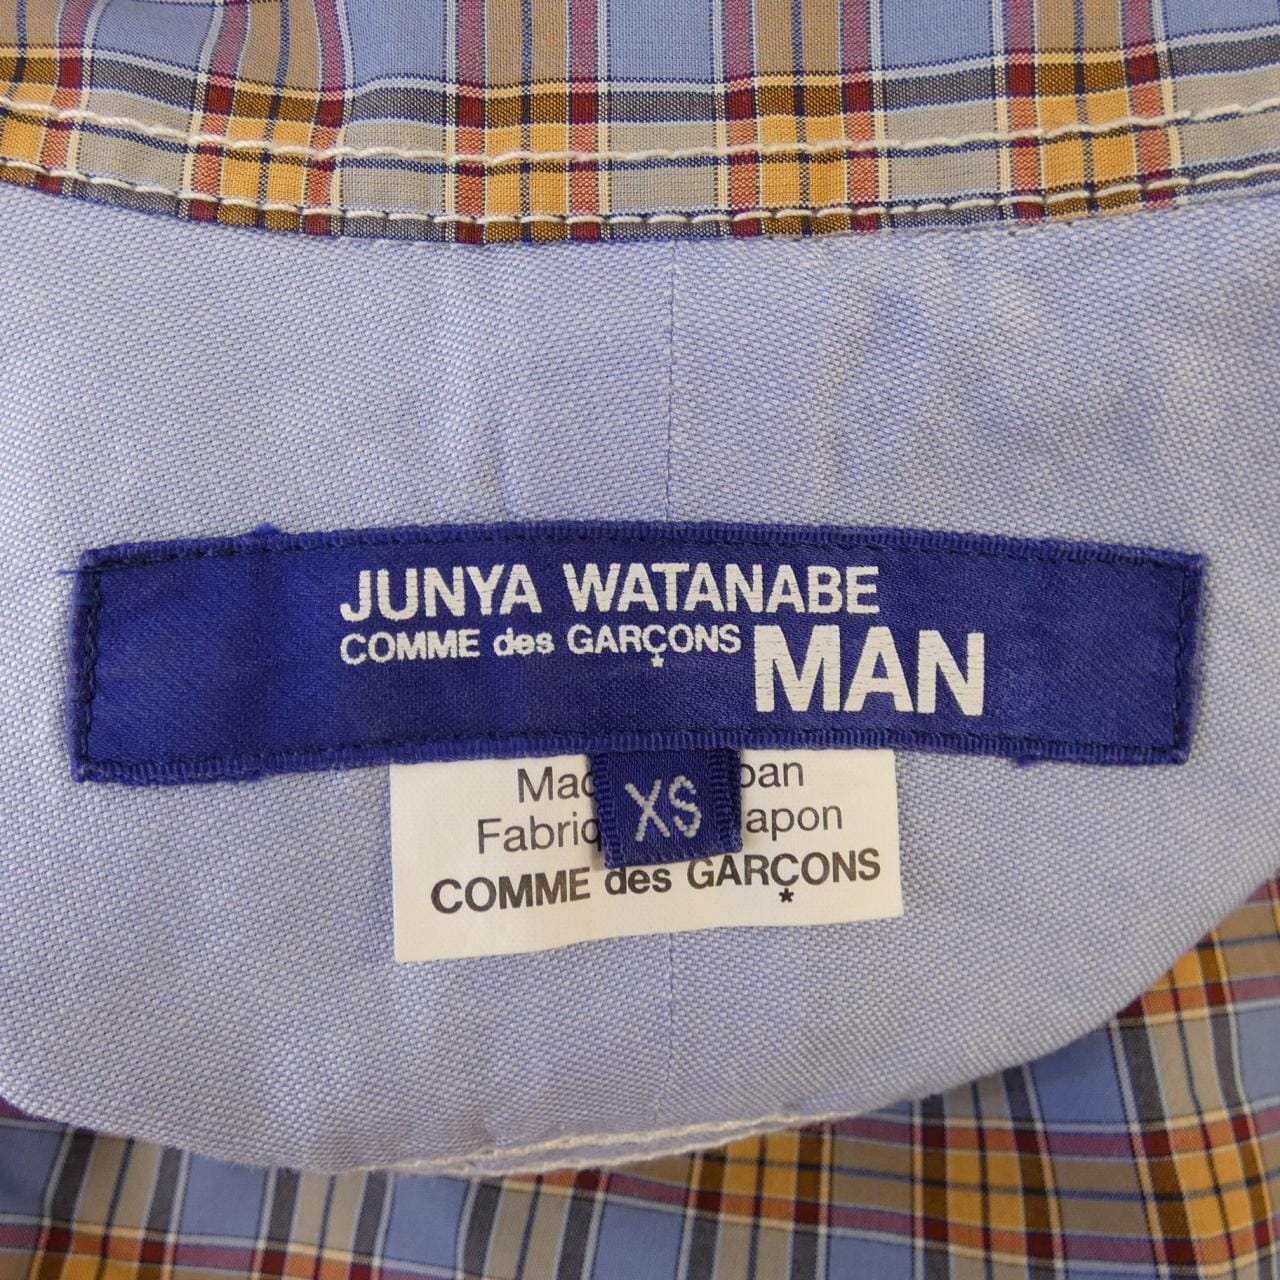 JUNYA WATANABE MAN shirt